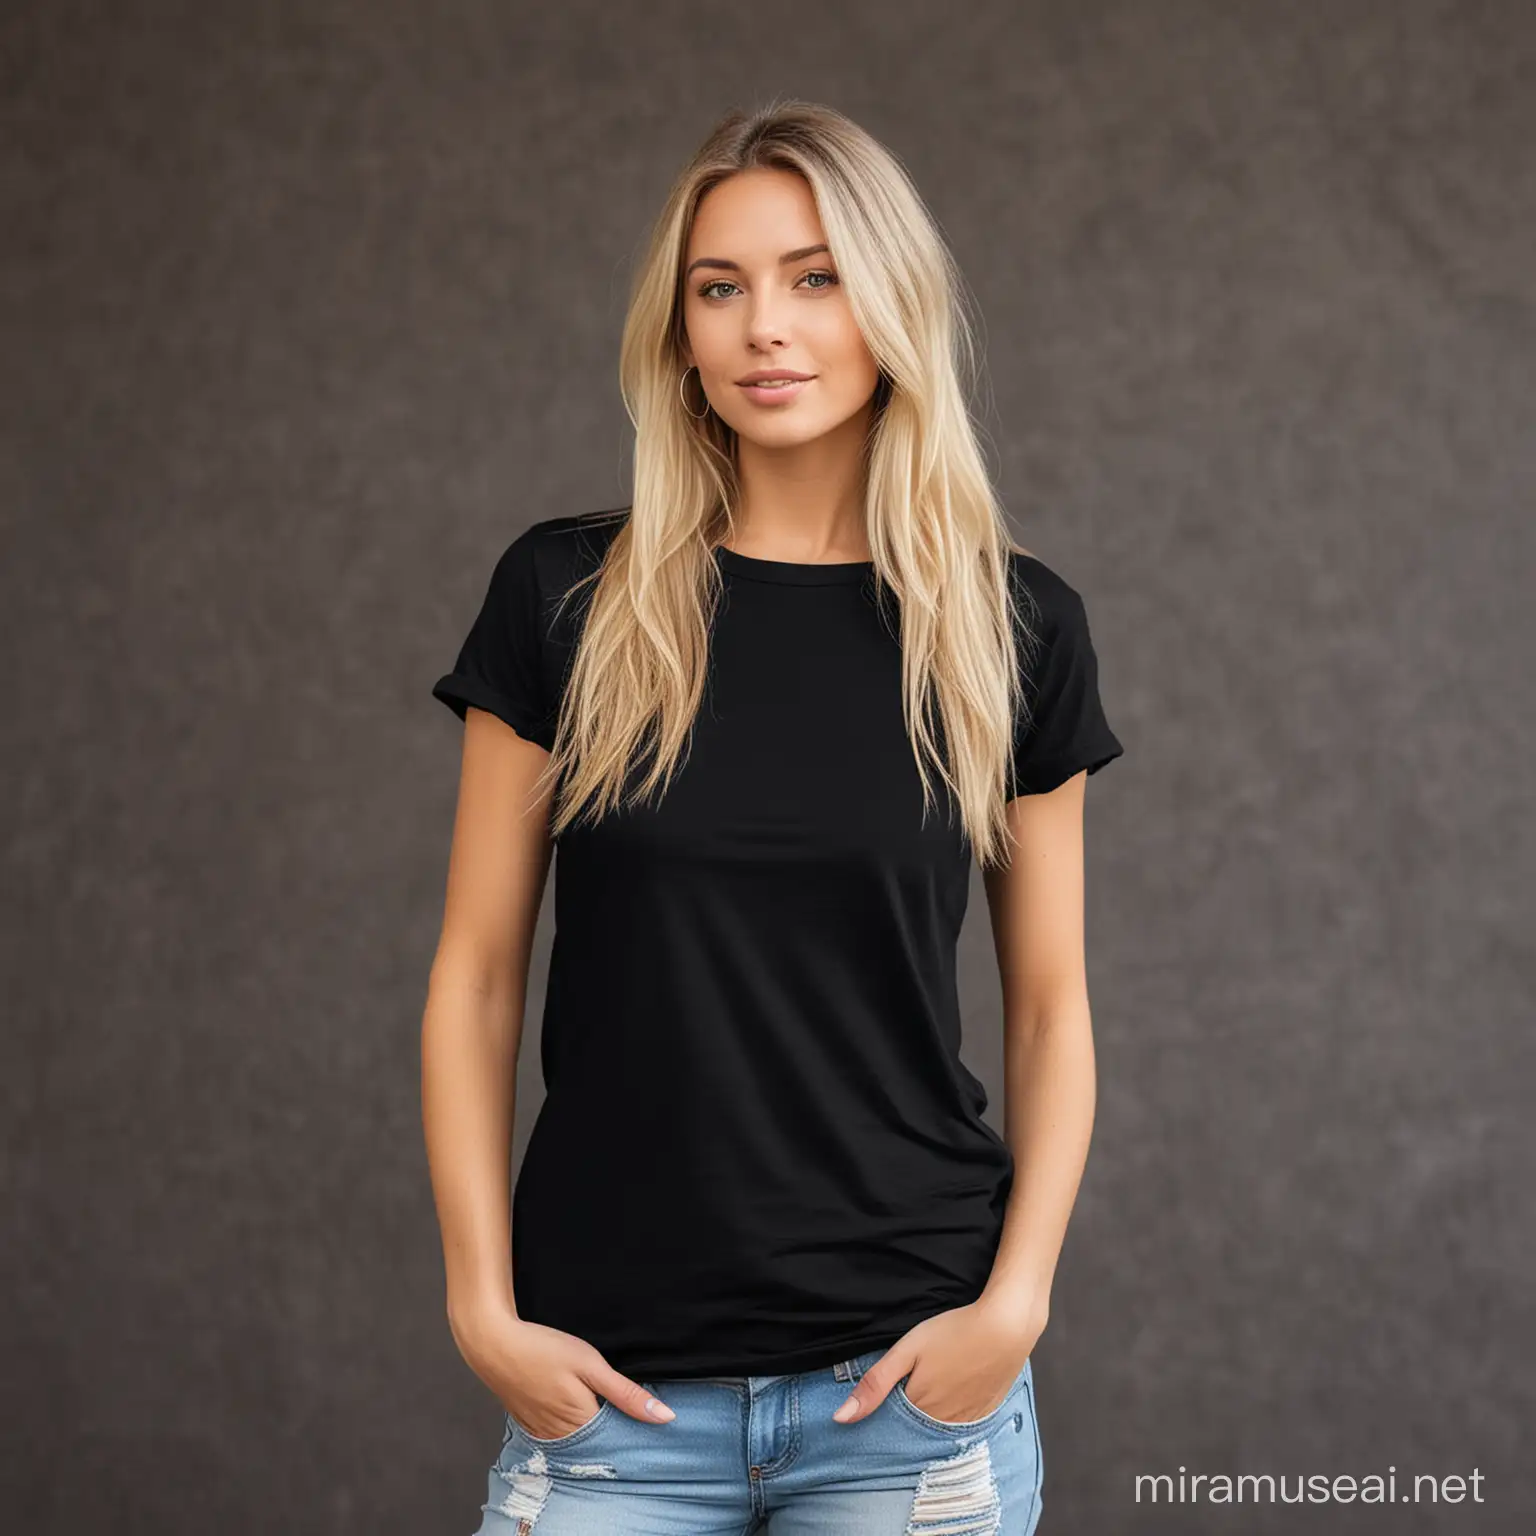 blonde woman wearing black t-shirt mockup simple boho wall background 